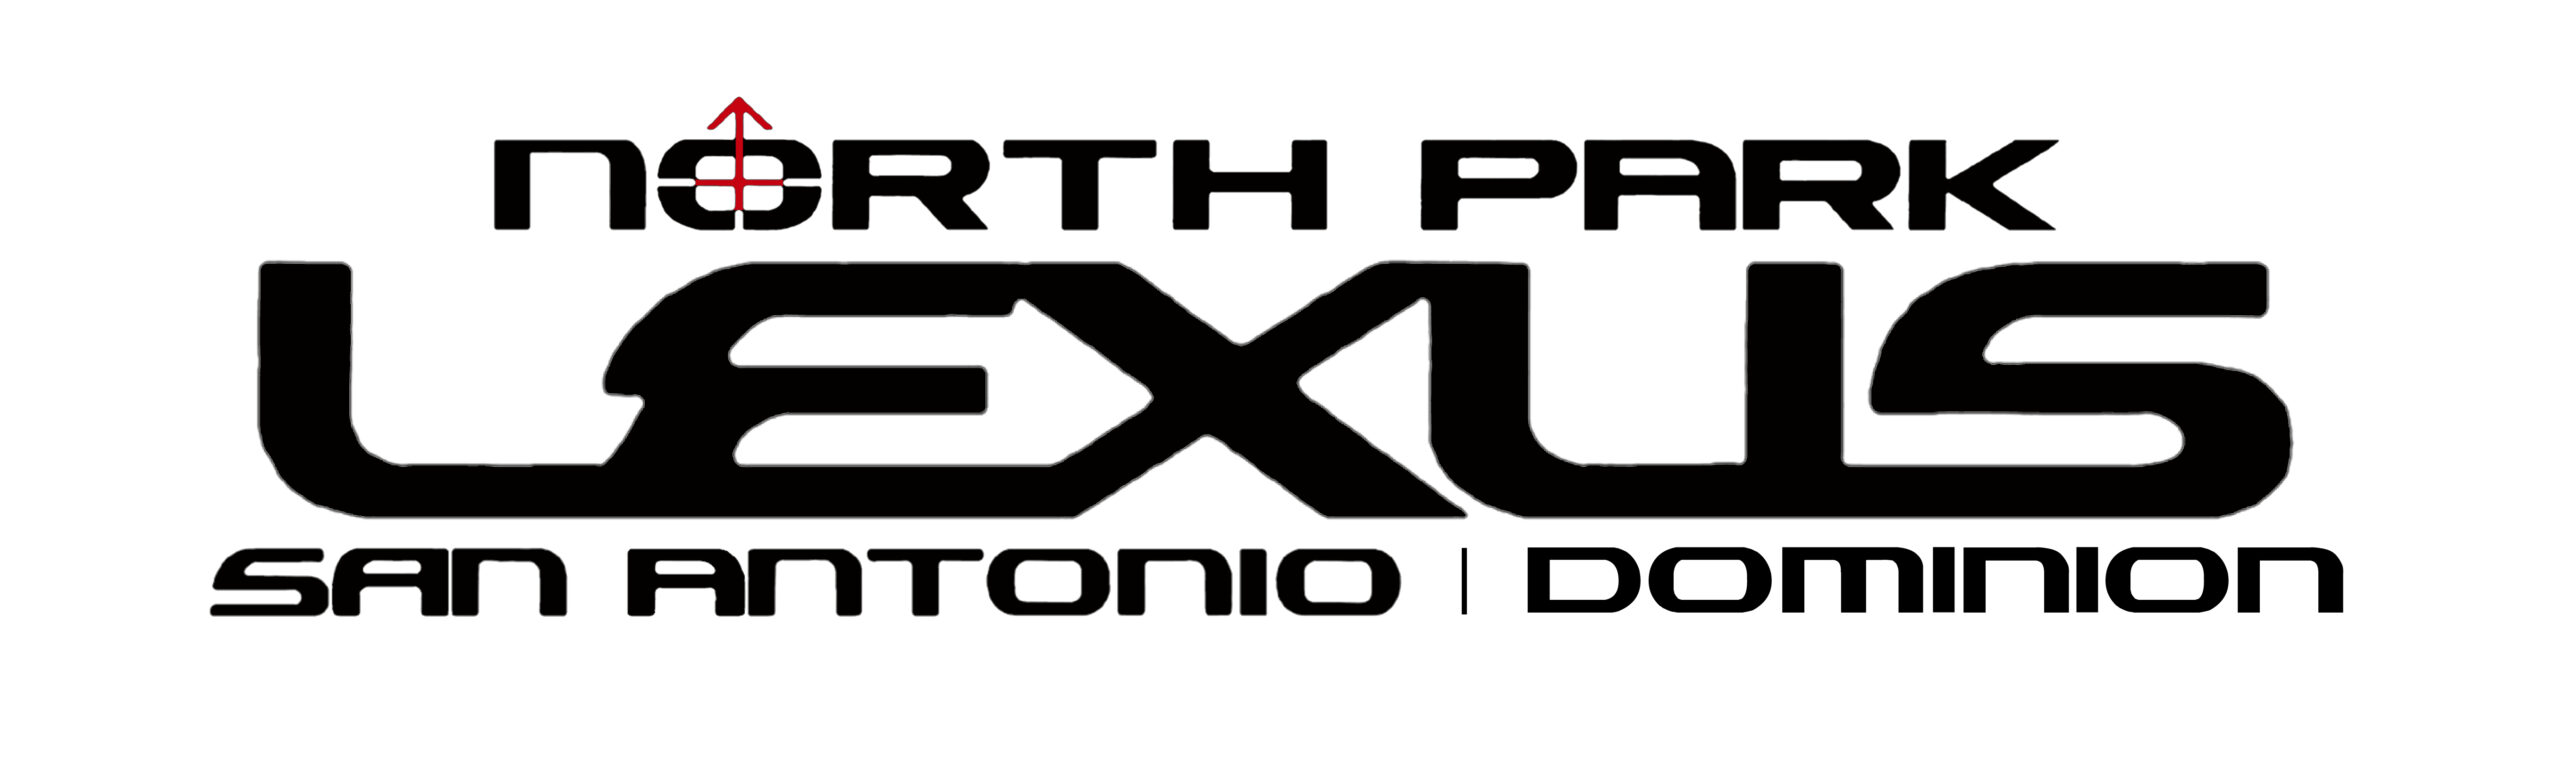 North Park Lexus San Antonio Dominion Logo